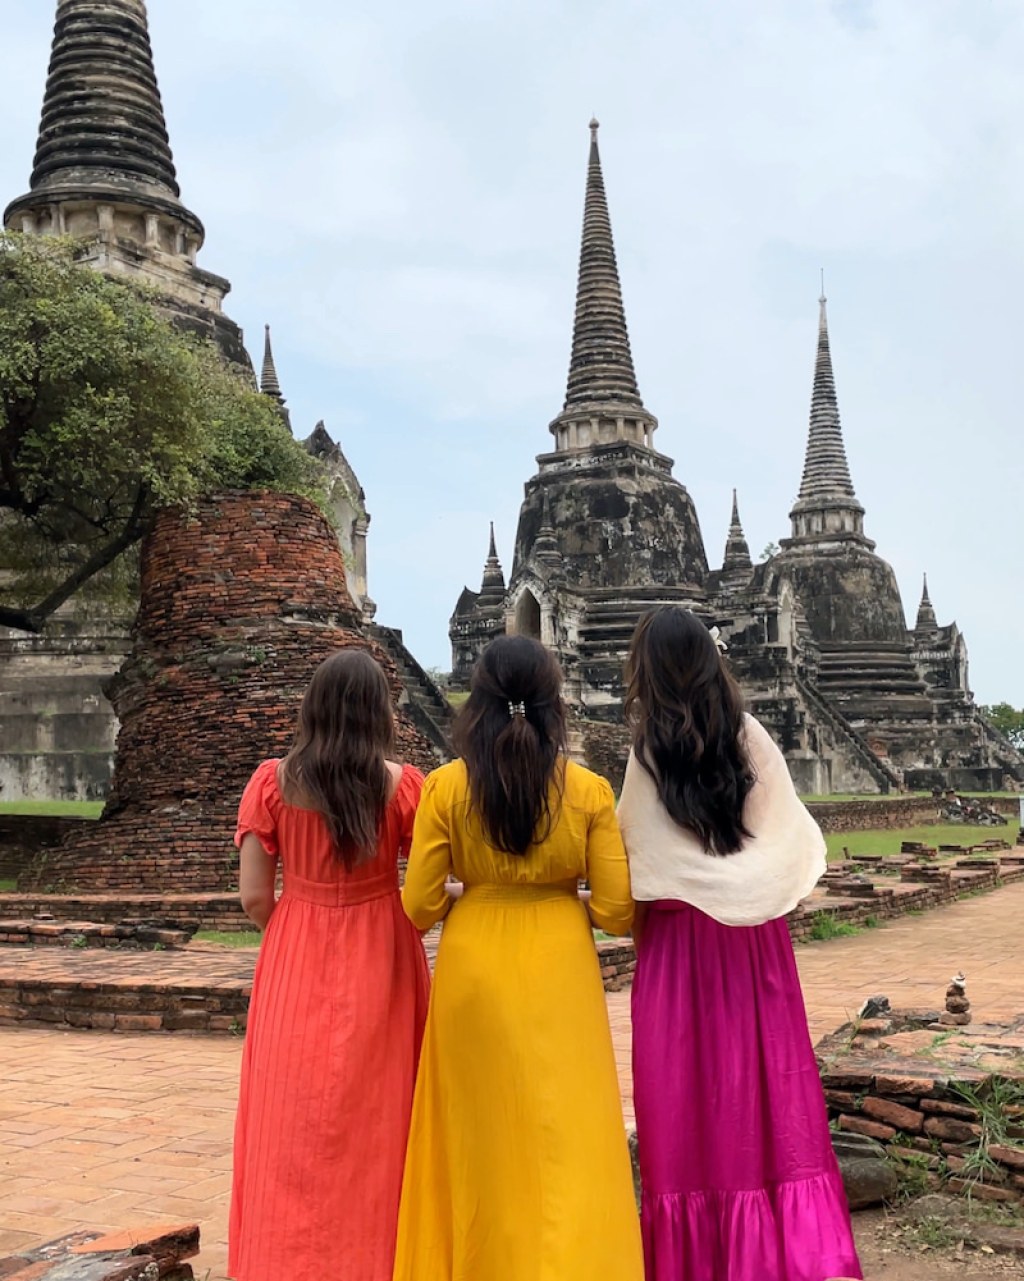 thailand trip itinerary 8 days - Thailand Itinerary:  Days in Bangkok and Phuket - FashionTravelRepeat